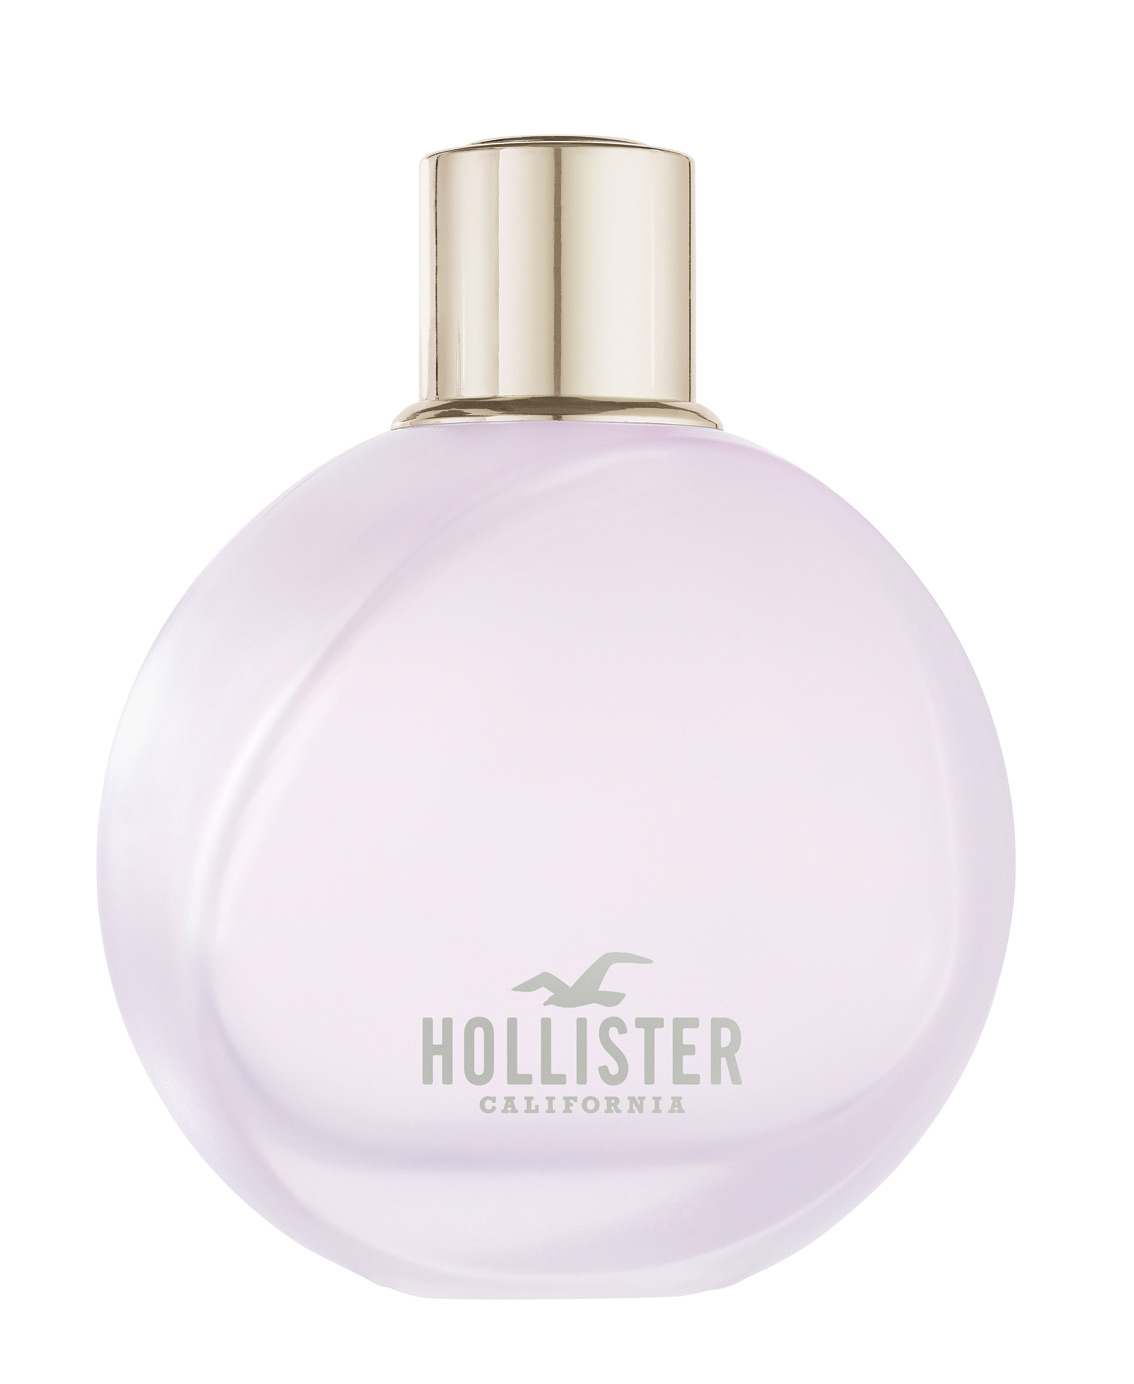 hollister free wave perfume